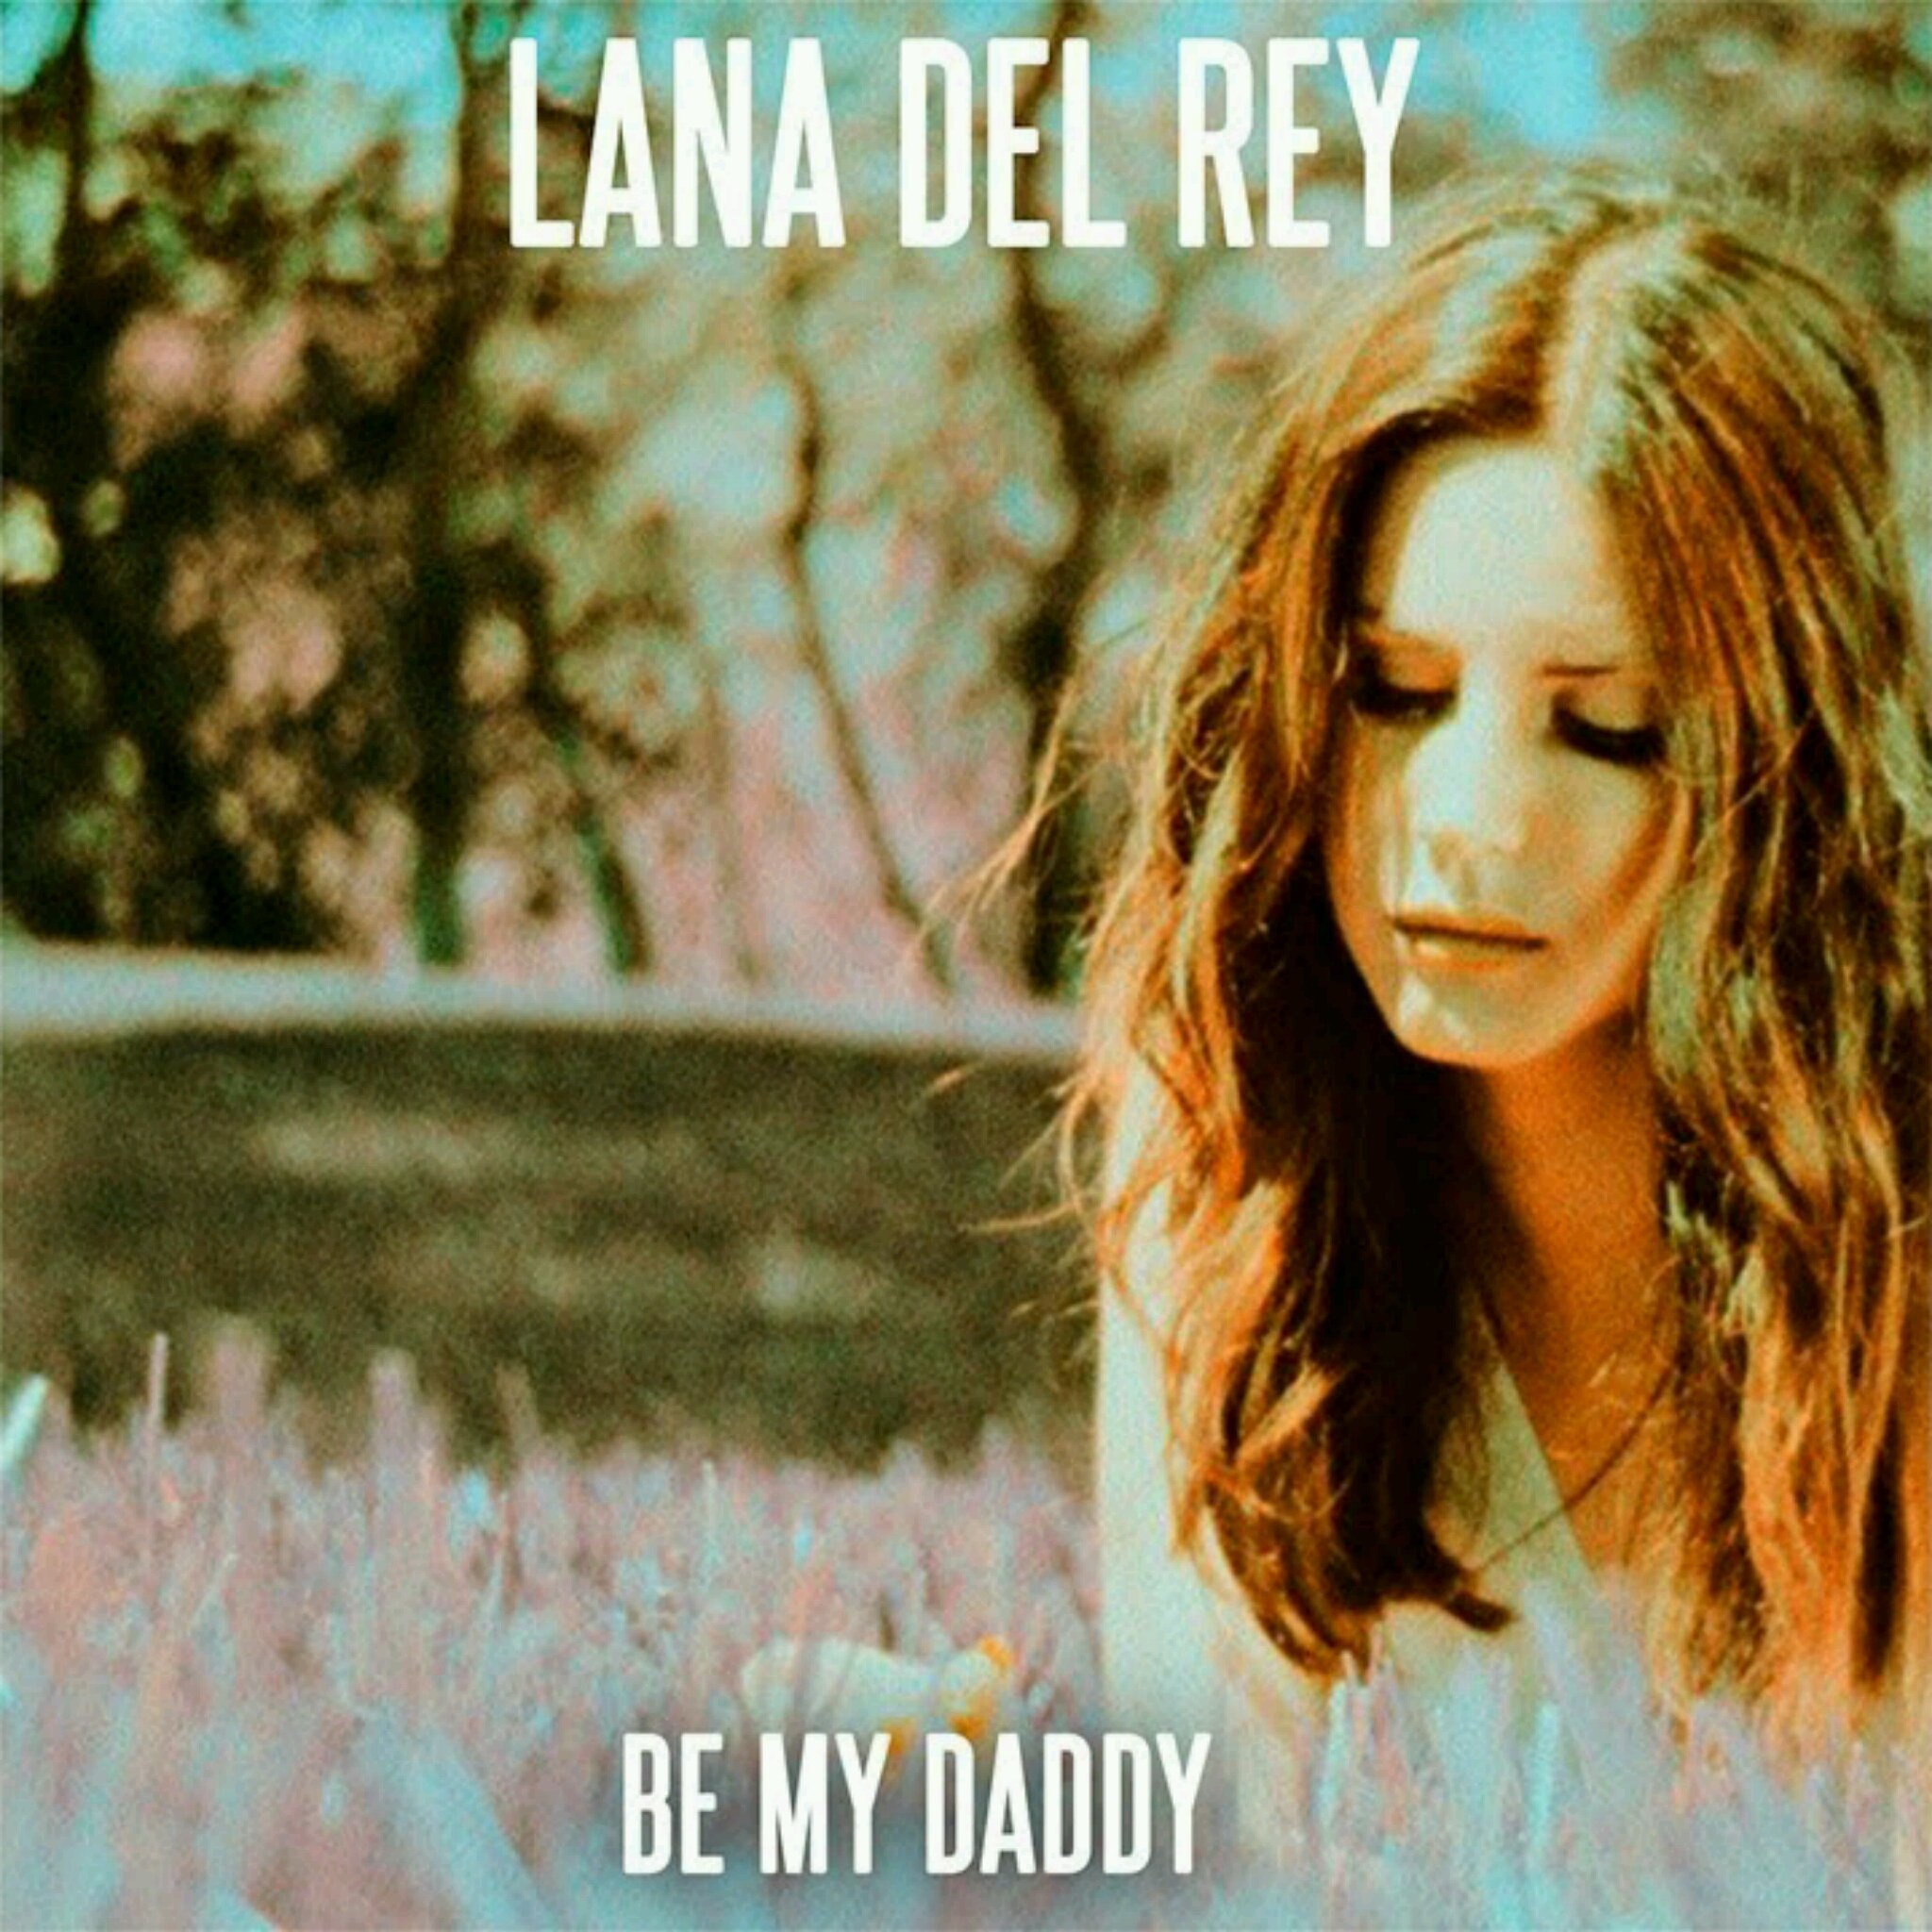 Be my daddy lana del rey lyrics